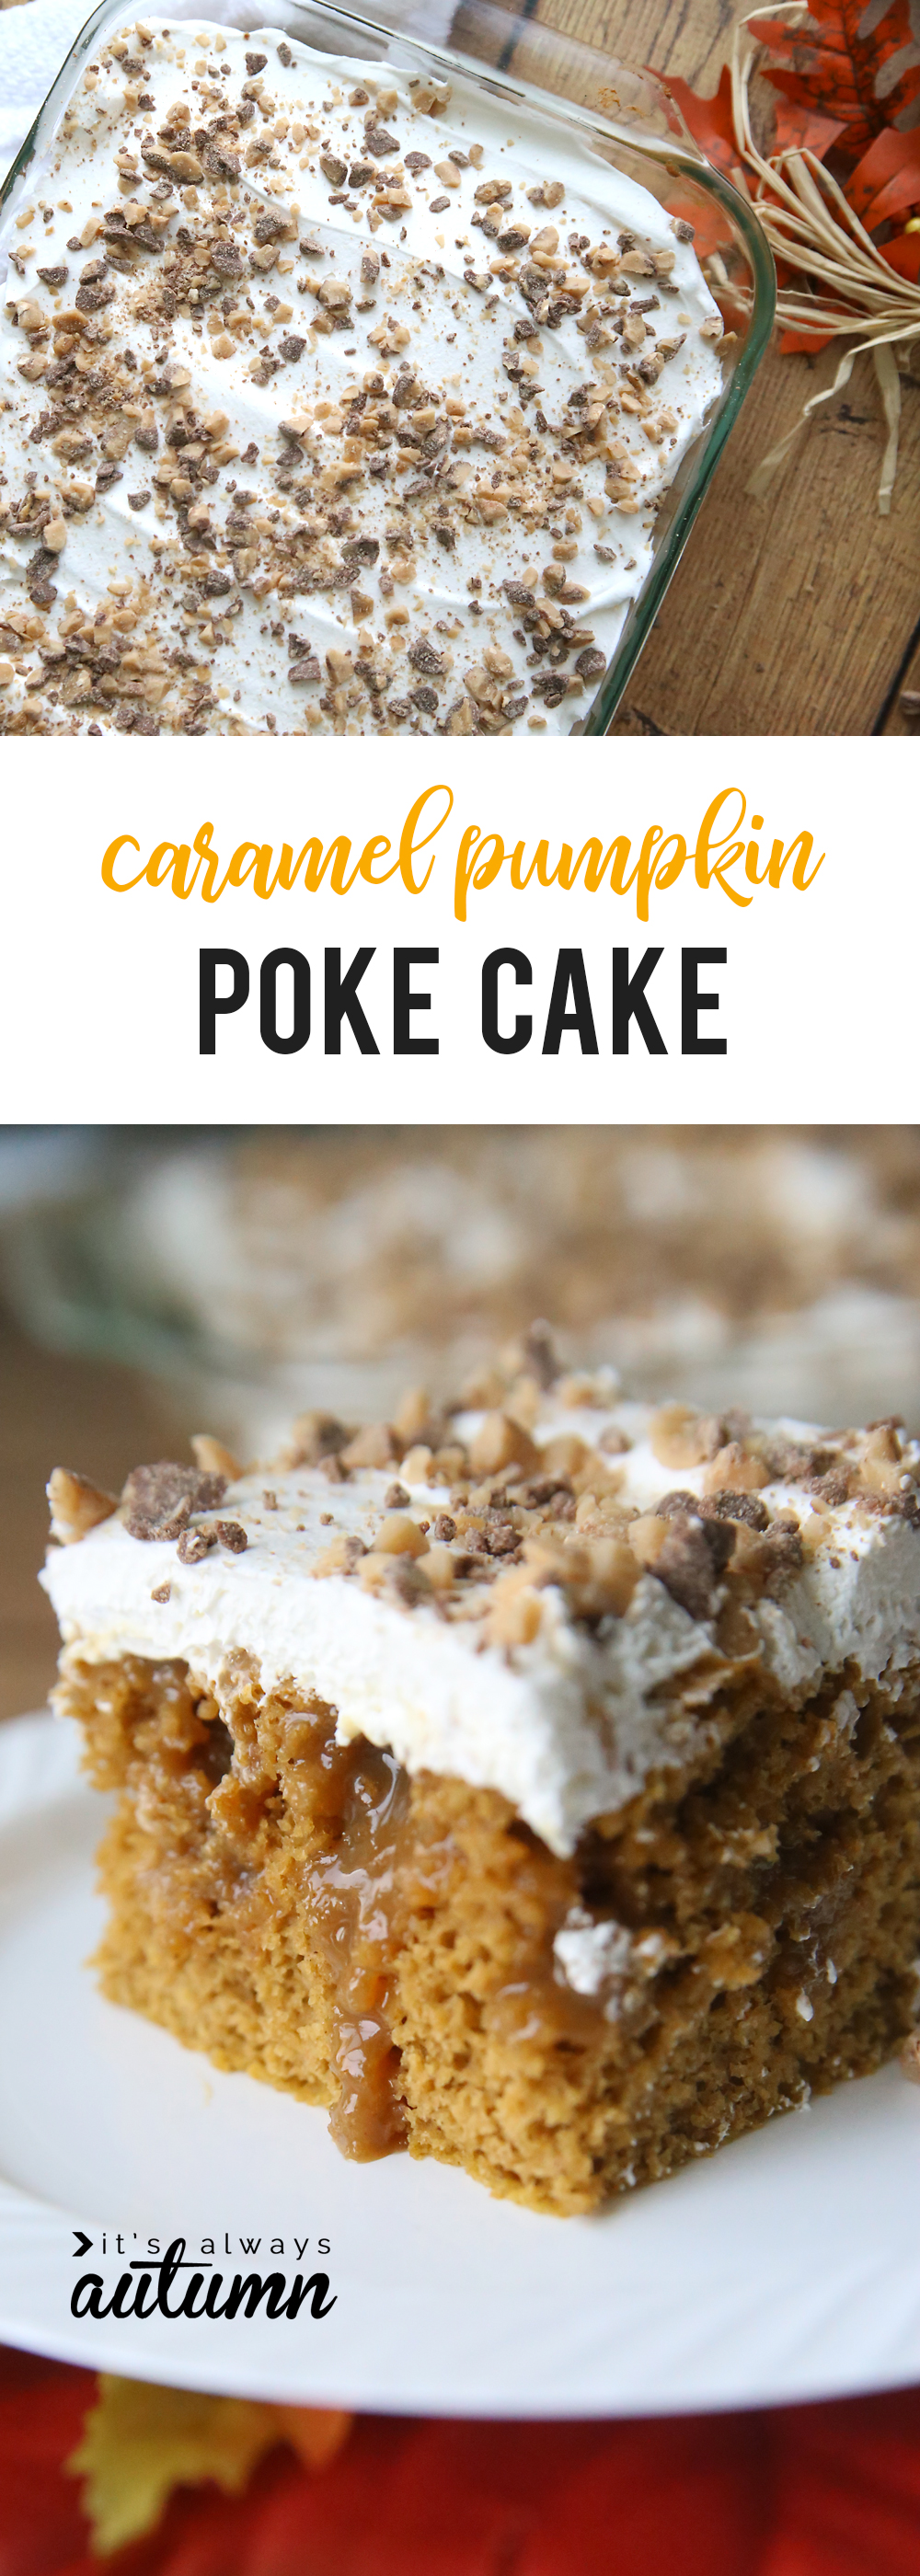 Caramel pumpkin poke cake